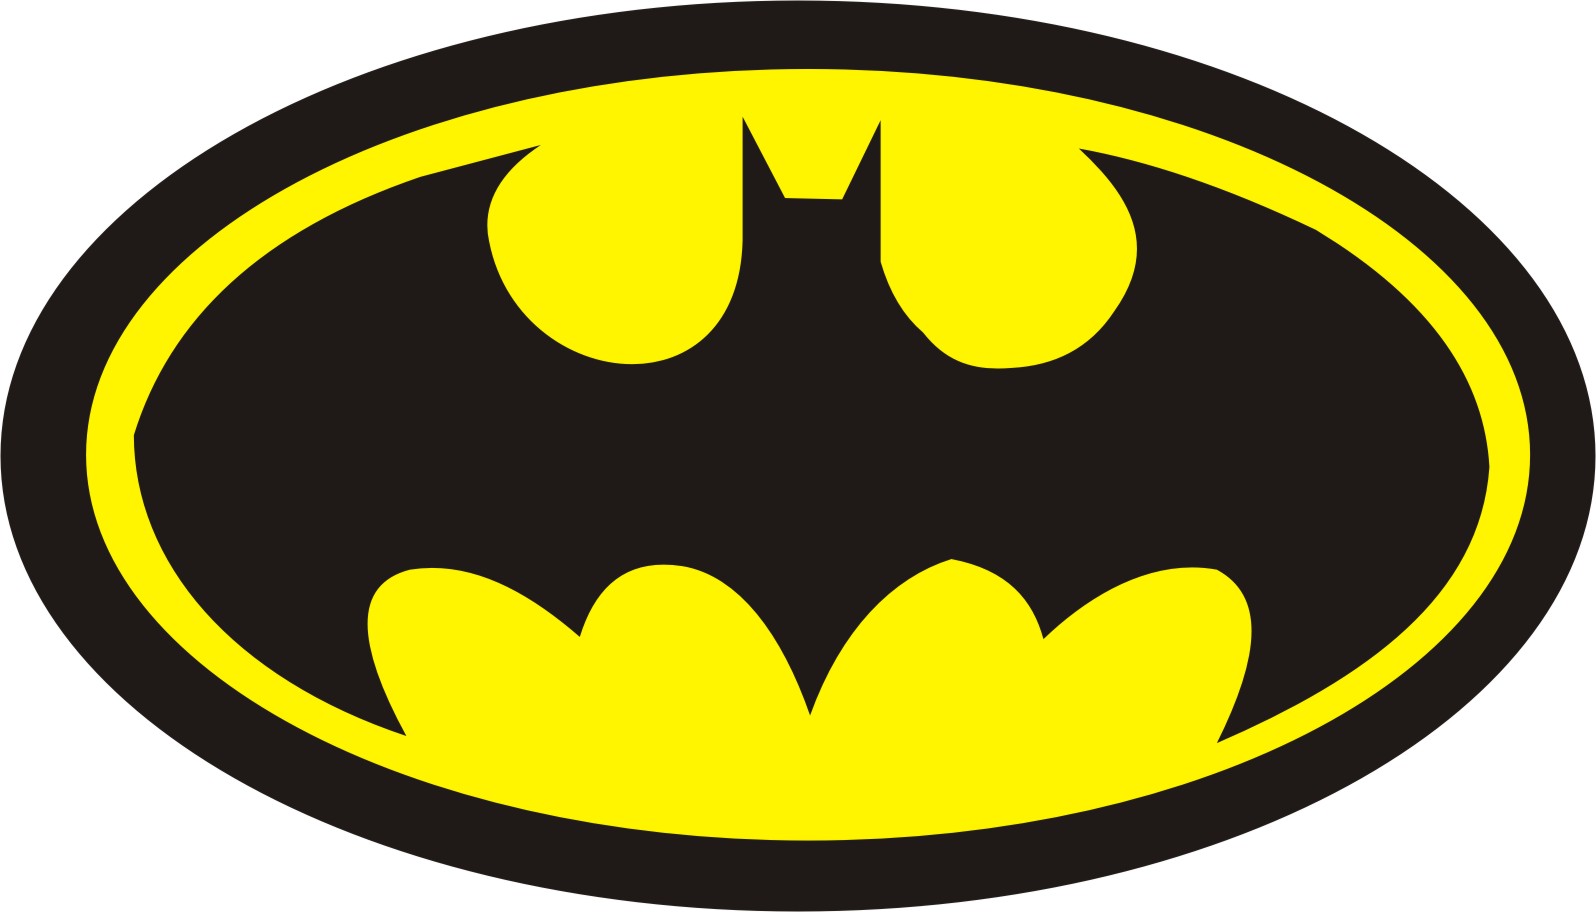 Batman Logo Jpg | Free Download Clip Art | Free Clip Art | on ...